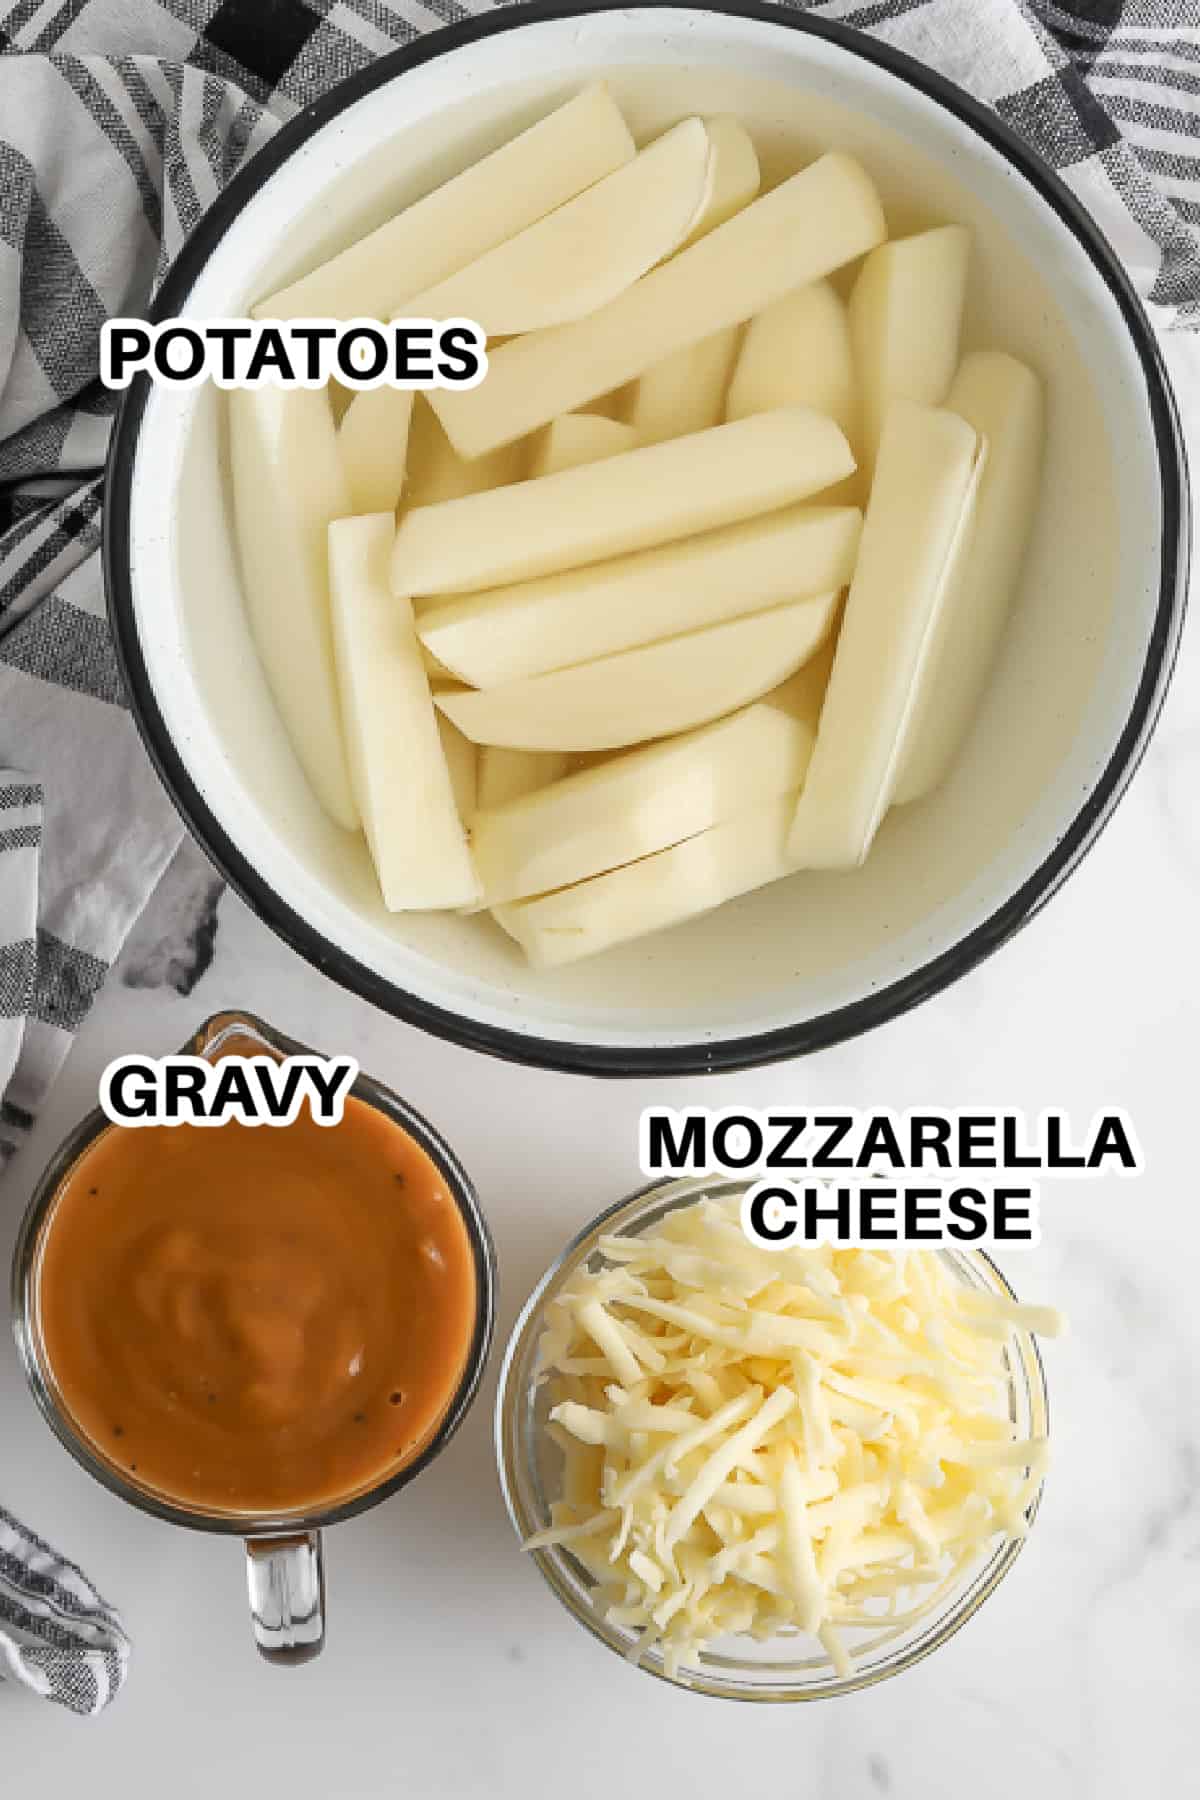 potatoes, gravy and mozzarella cheese assembled to make disco fries.